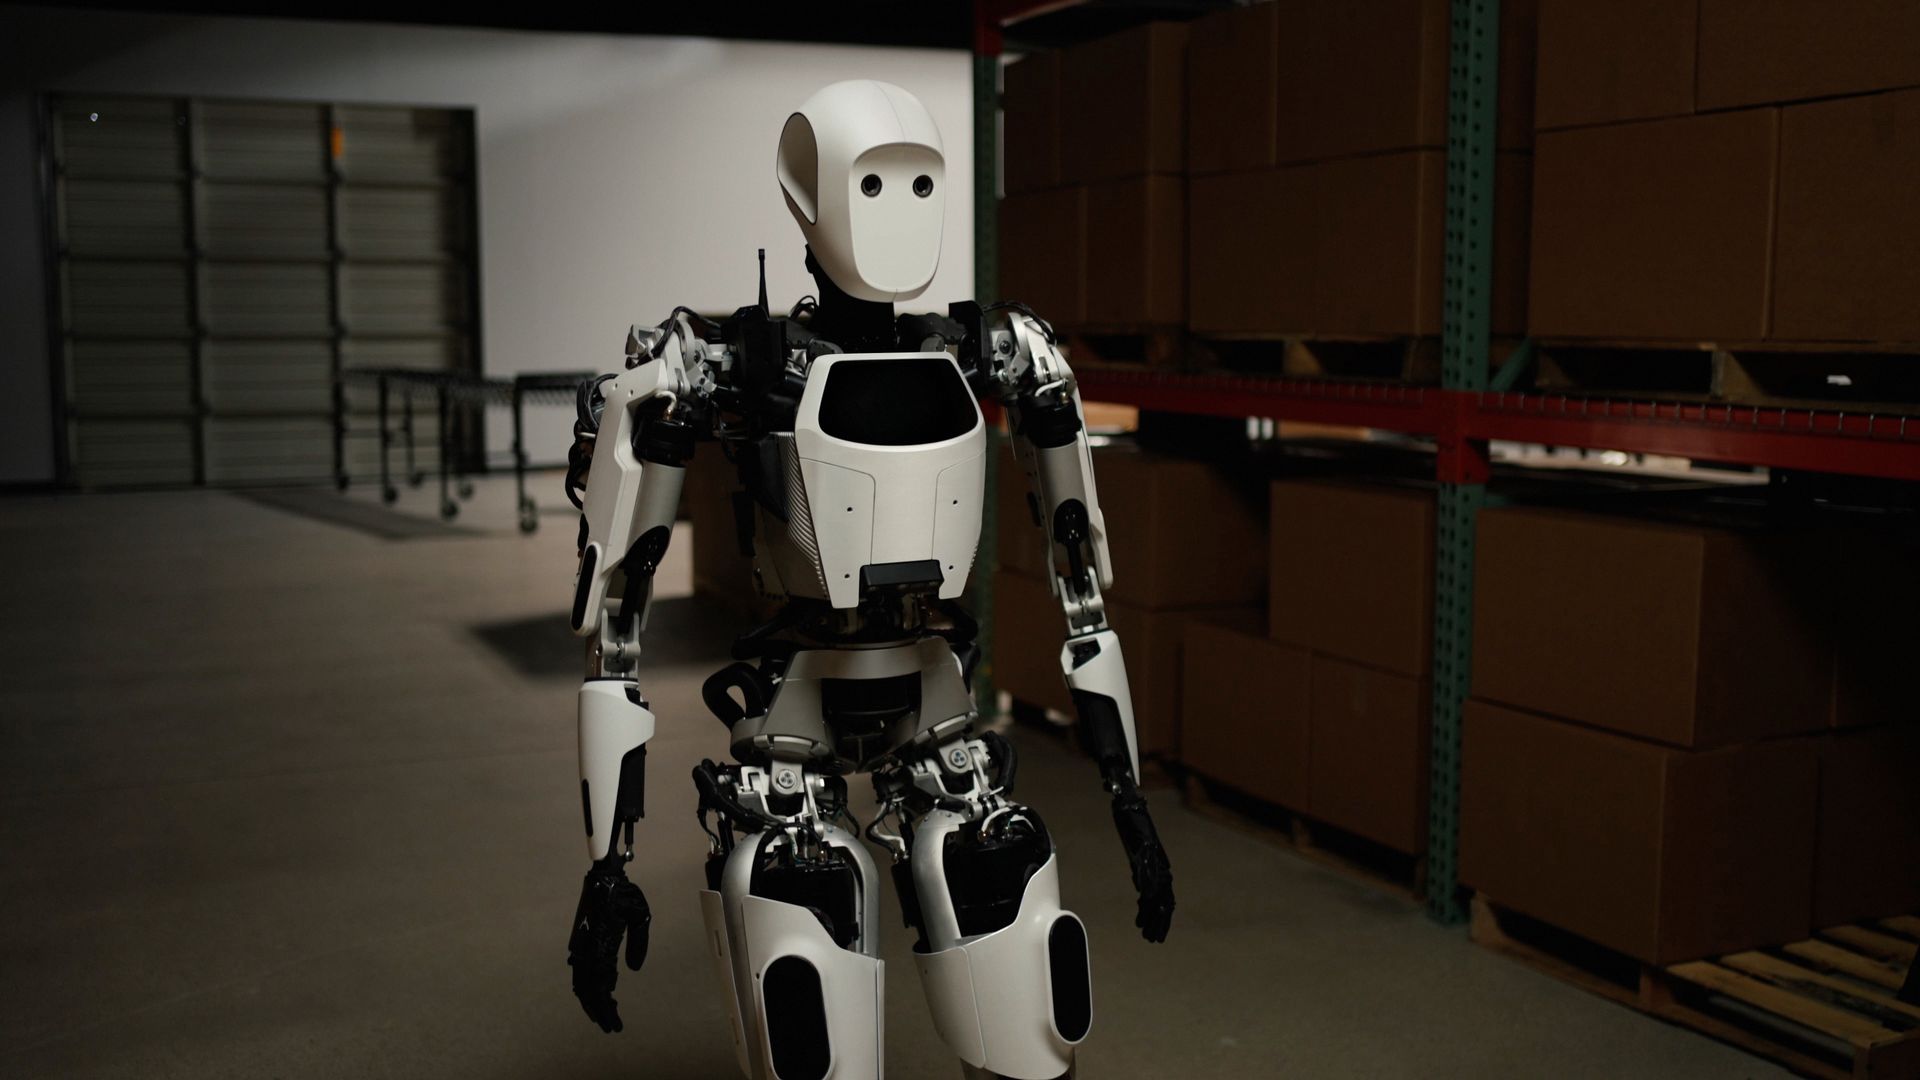 A humanoid robot walks through an office /warehouse space.